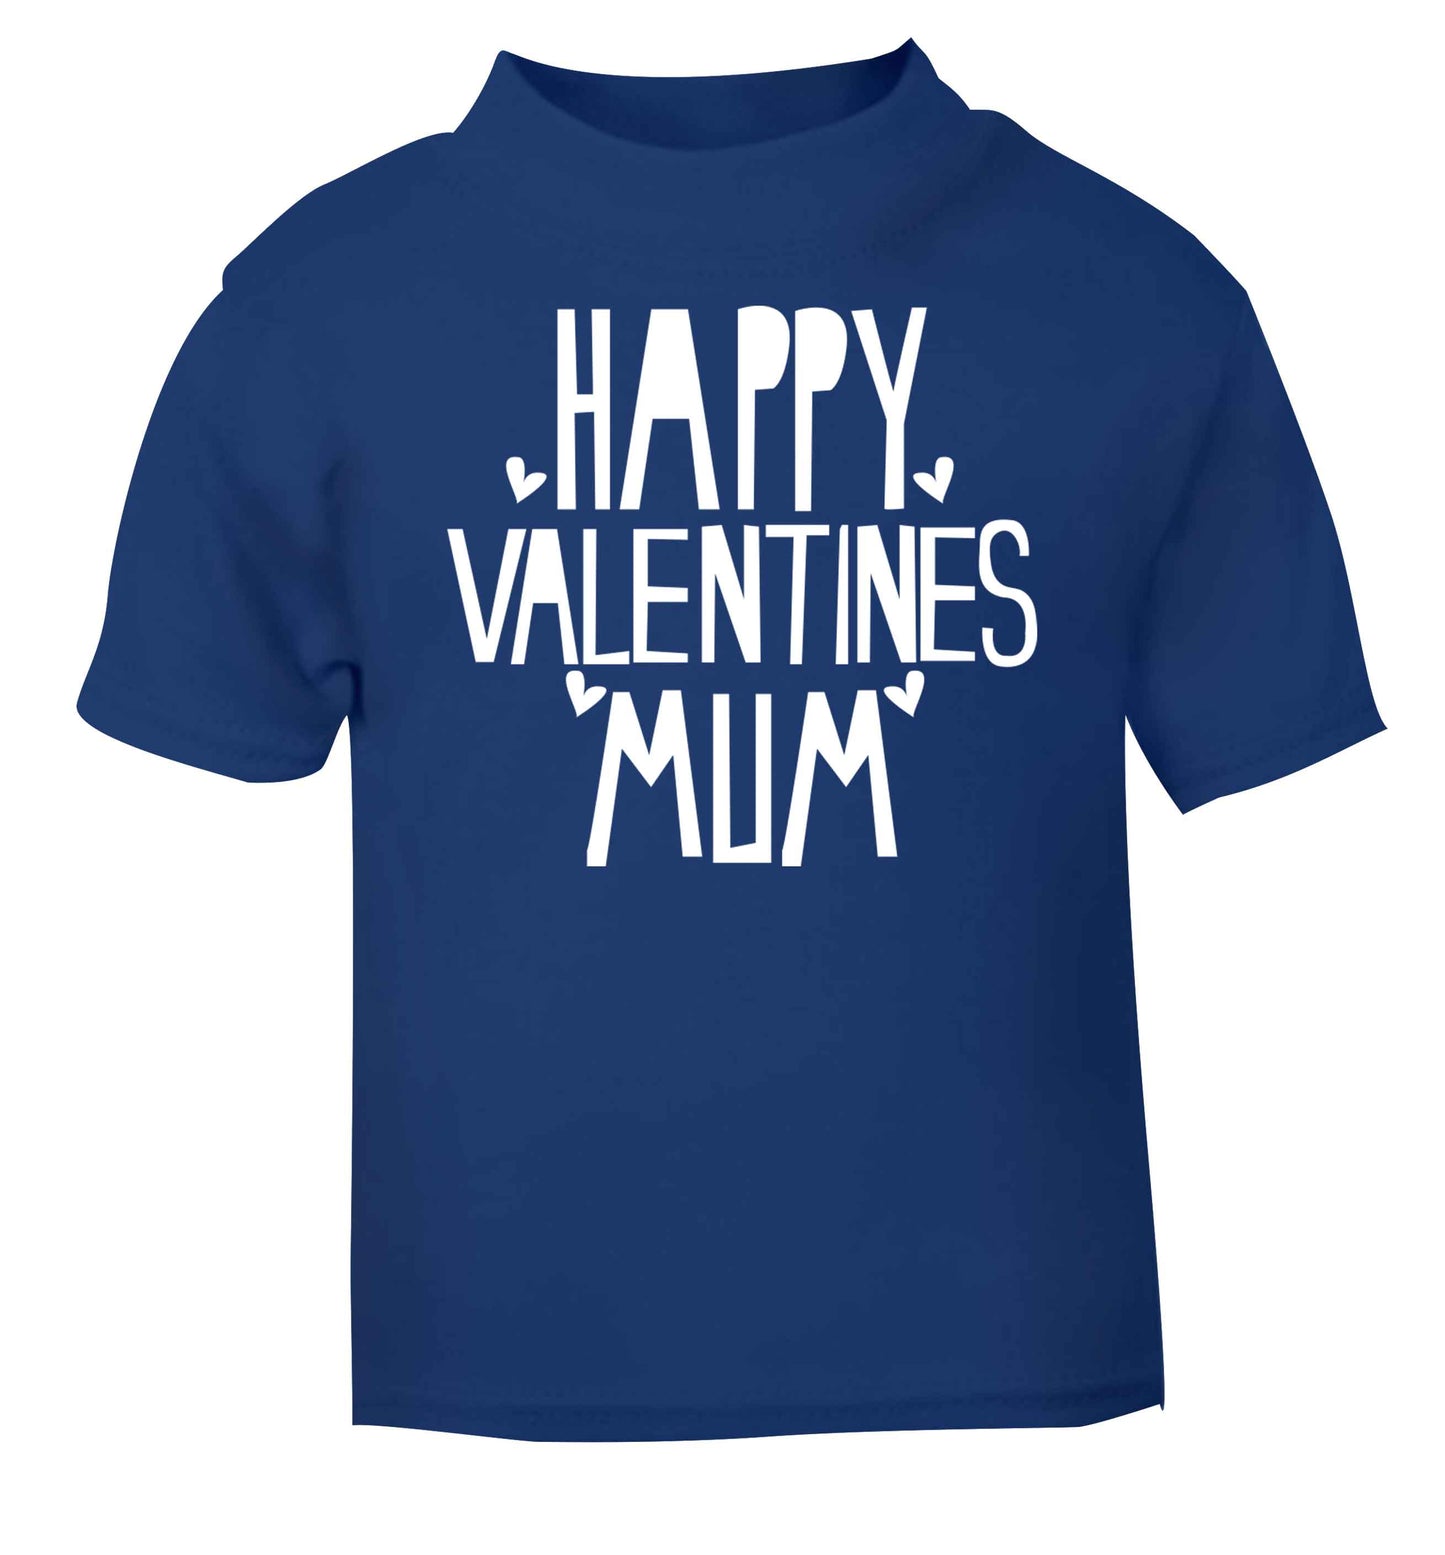 Happy valentines mum blue baby toddler Tshirt 2 Years